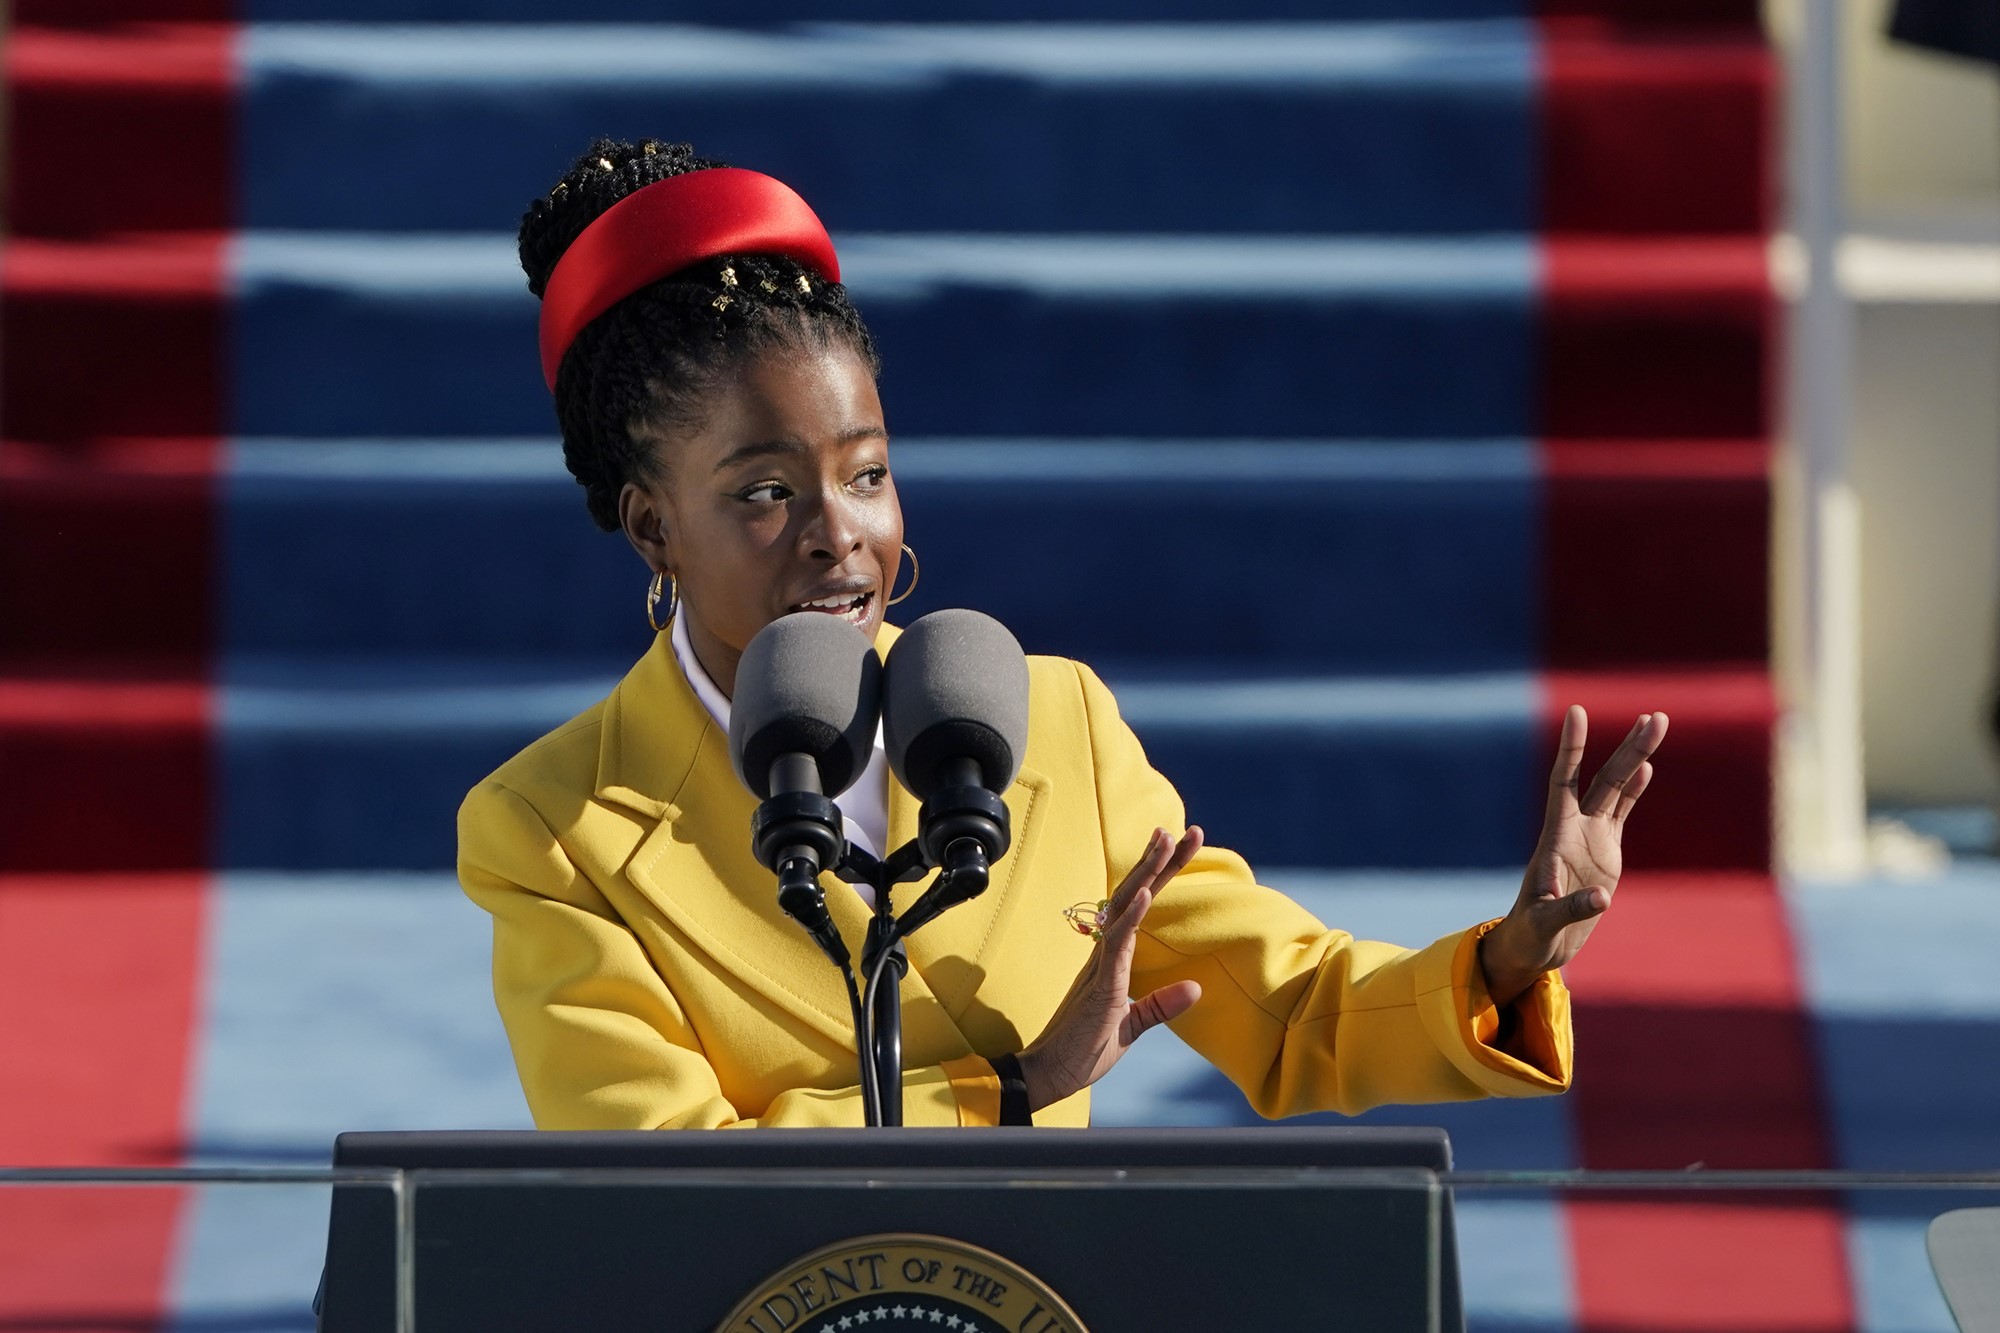 A black woman speaks at a podium during Joe Biden's inauguration